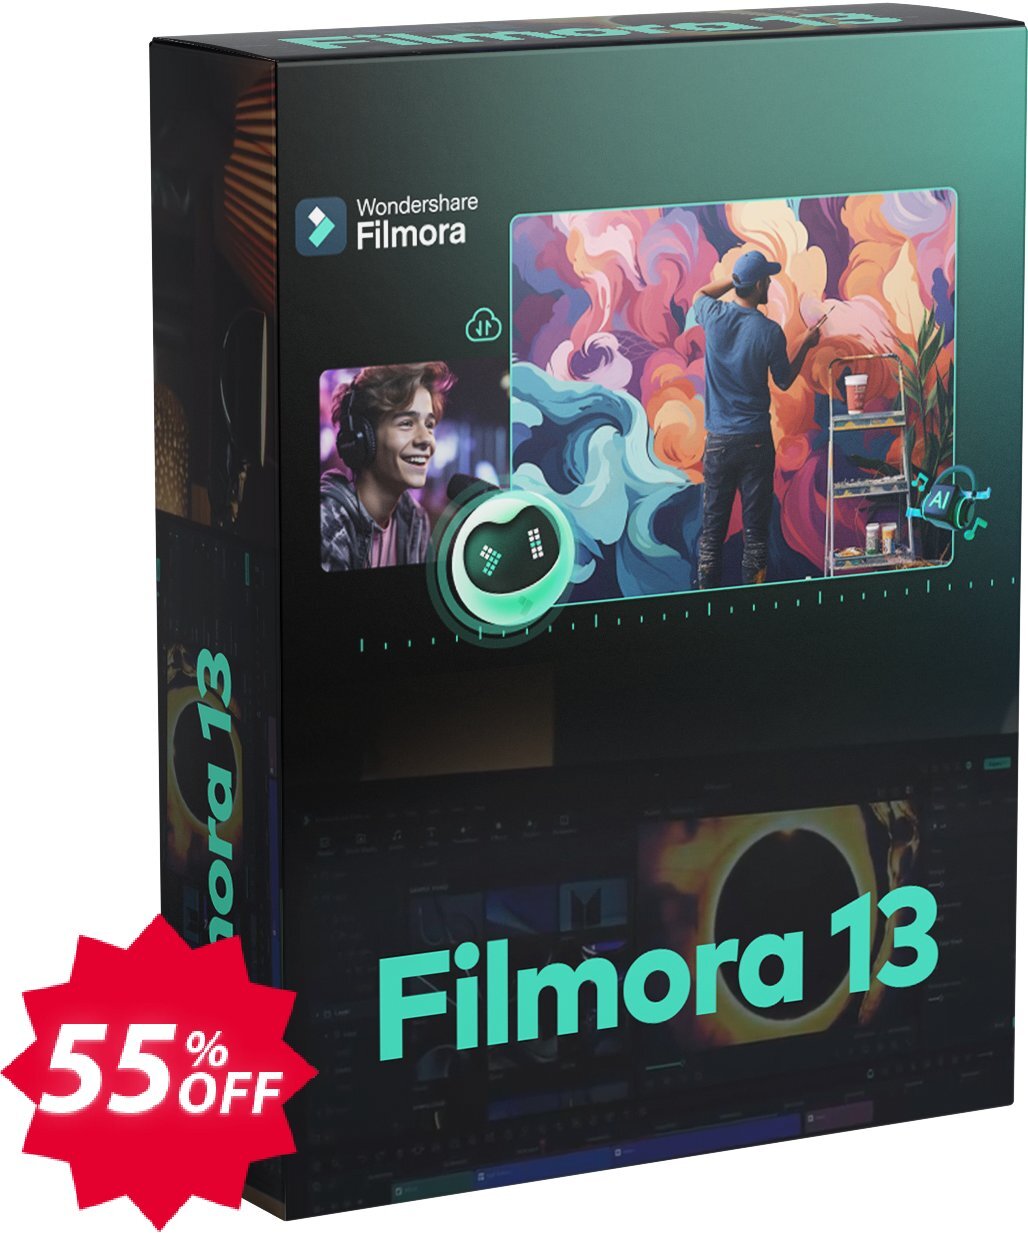 Wondershare Filmora Coupon code 55% discount 